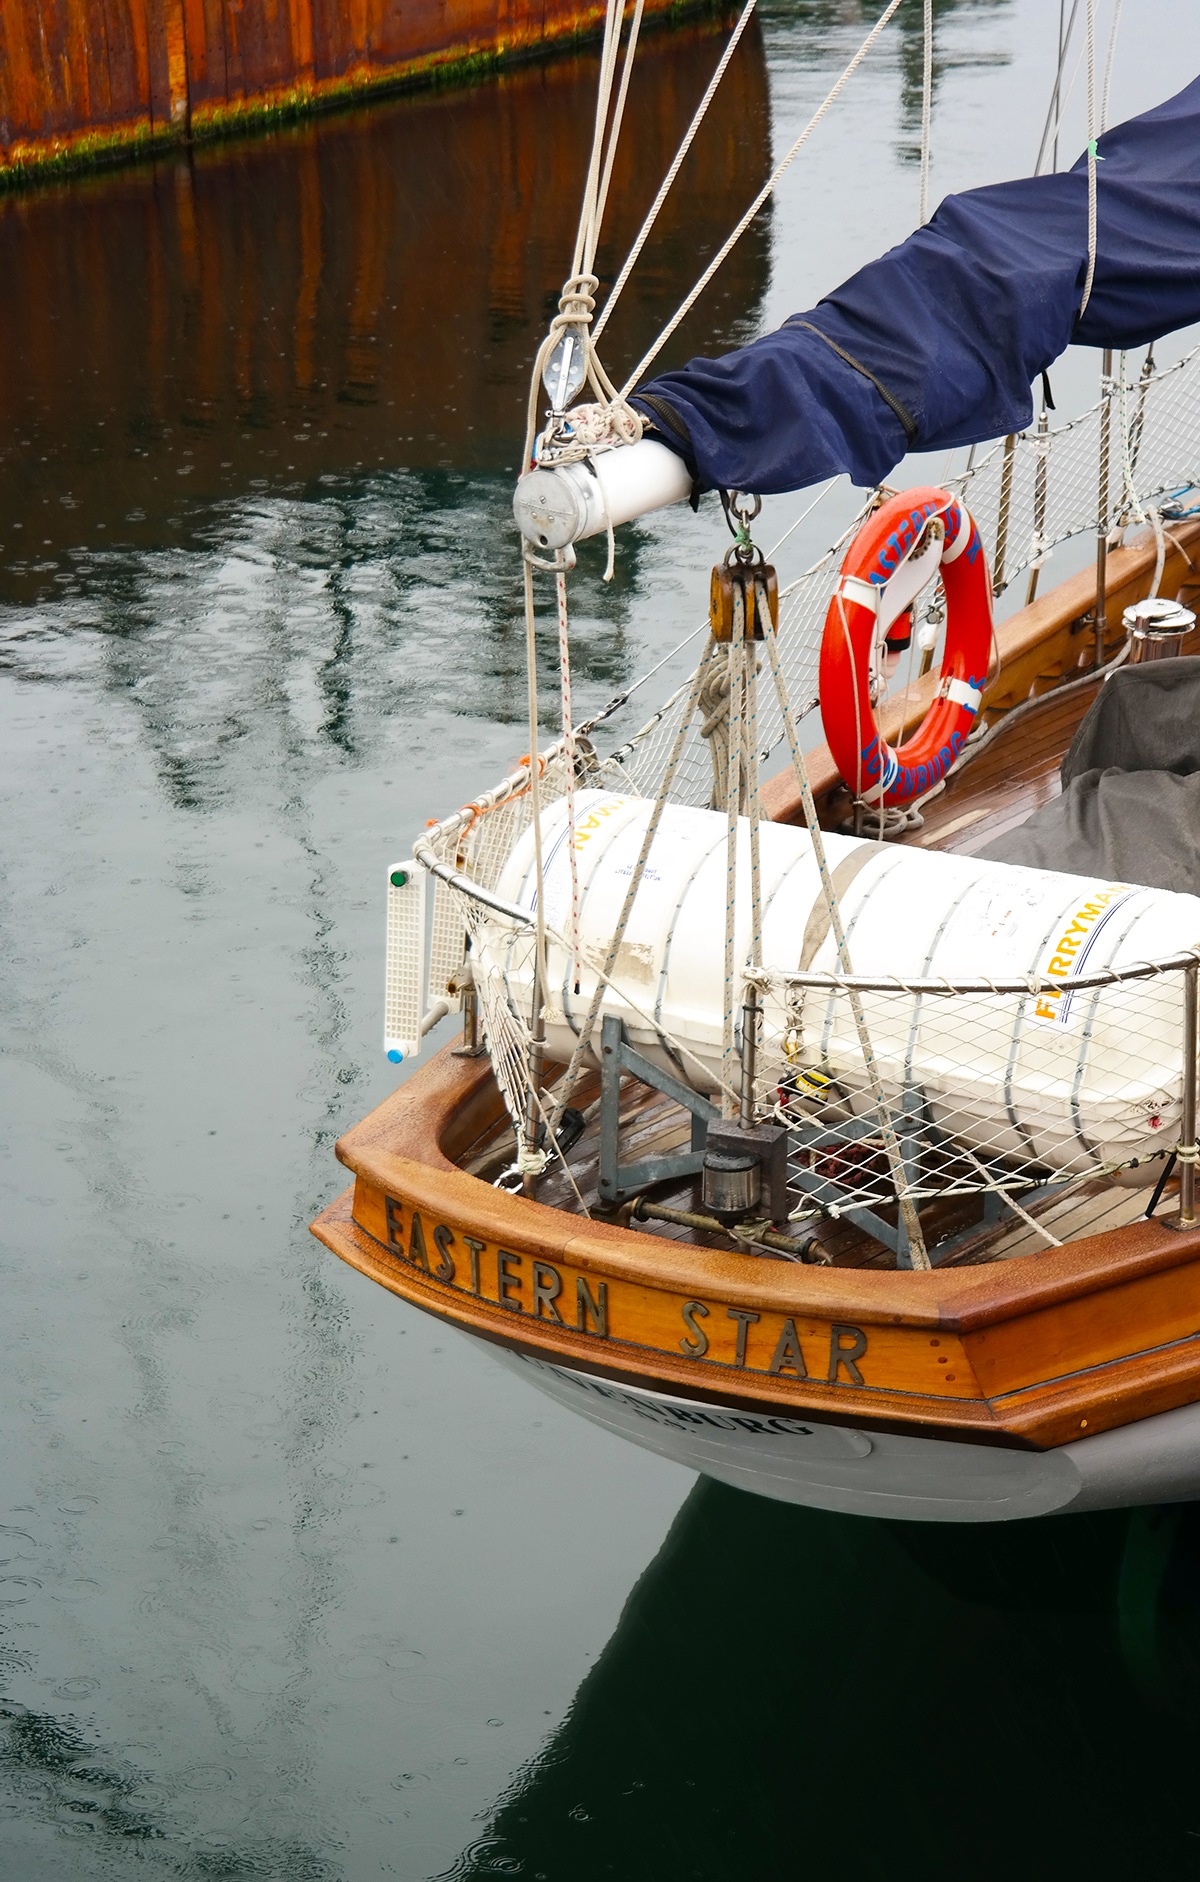 Northern Star - boat in Lunenburg, Nova Scotia, Canada